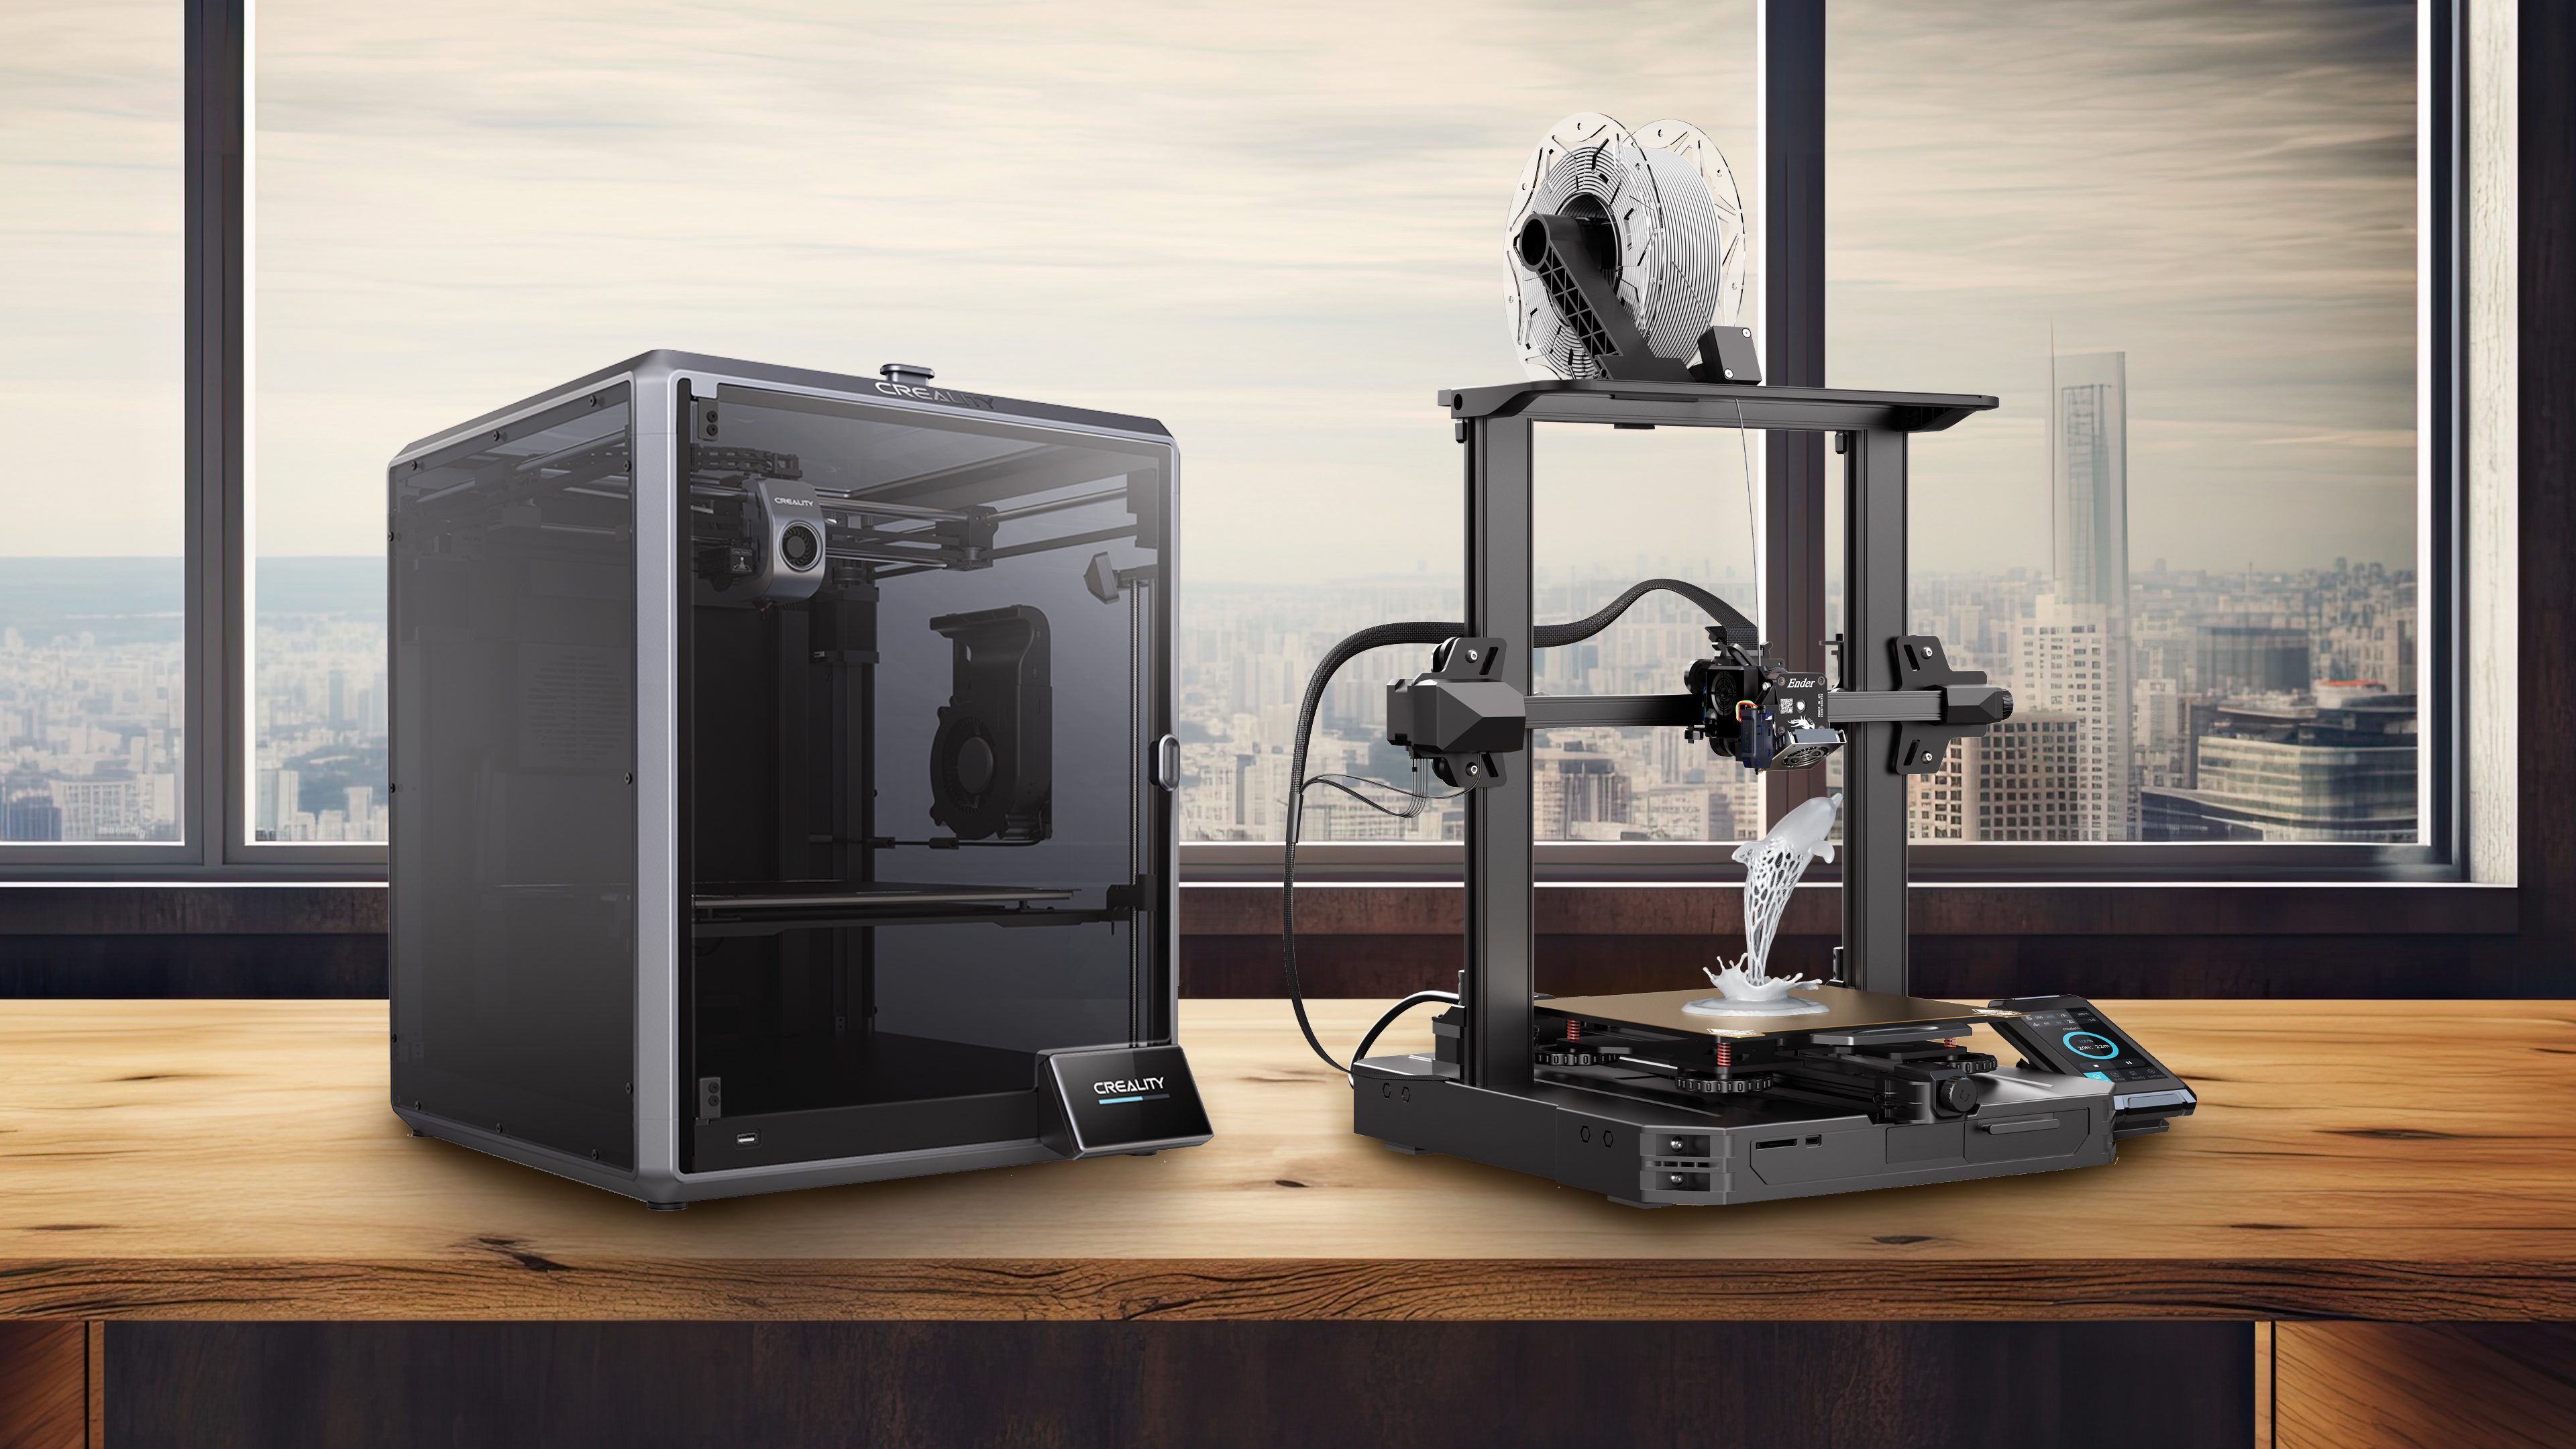 Creality K1 Max Imprimante 3D avec Caméra IA, 600mm/s Ultra